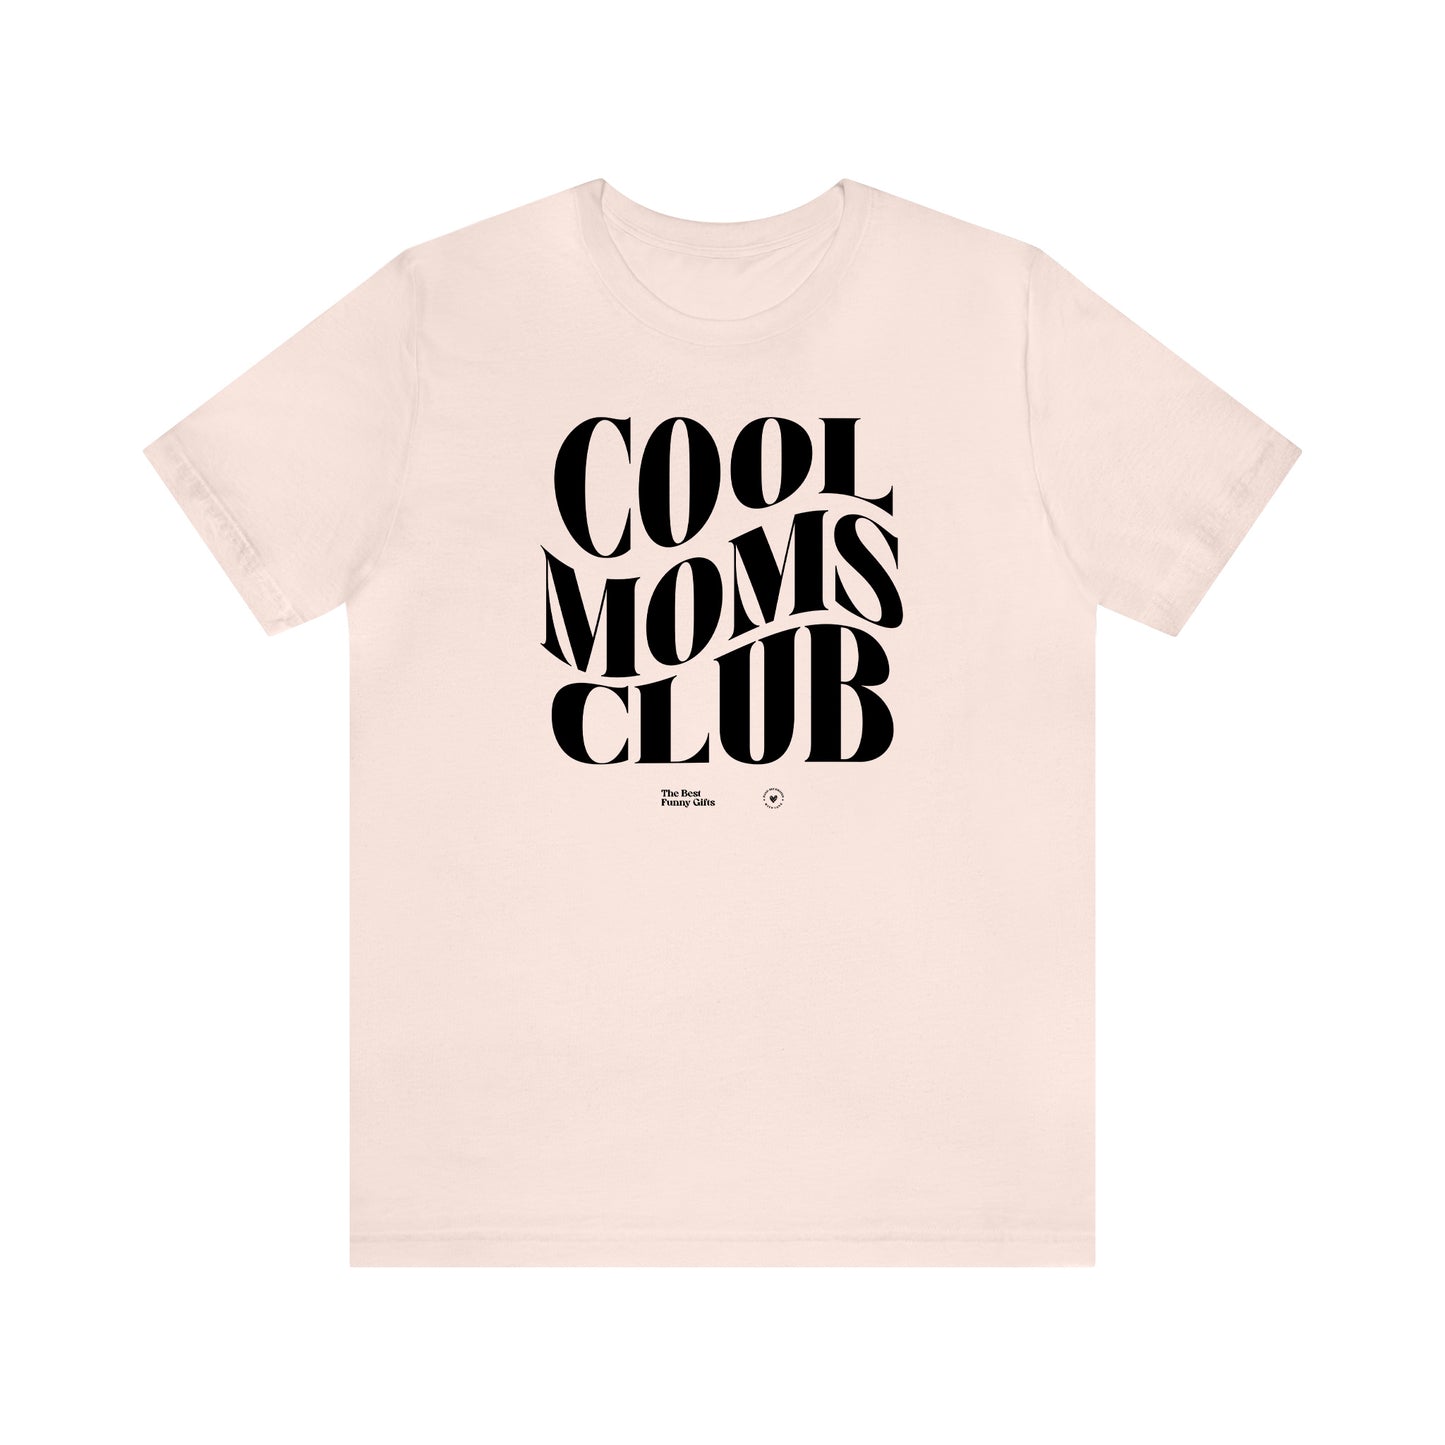 Funny Shirts for Women - Cool Moms Club - Women’s T Shirts